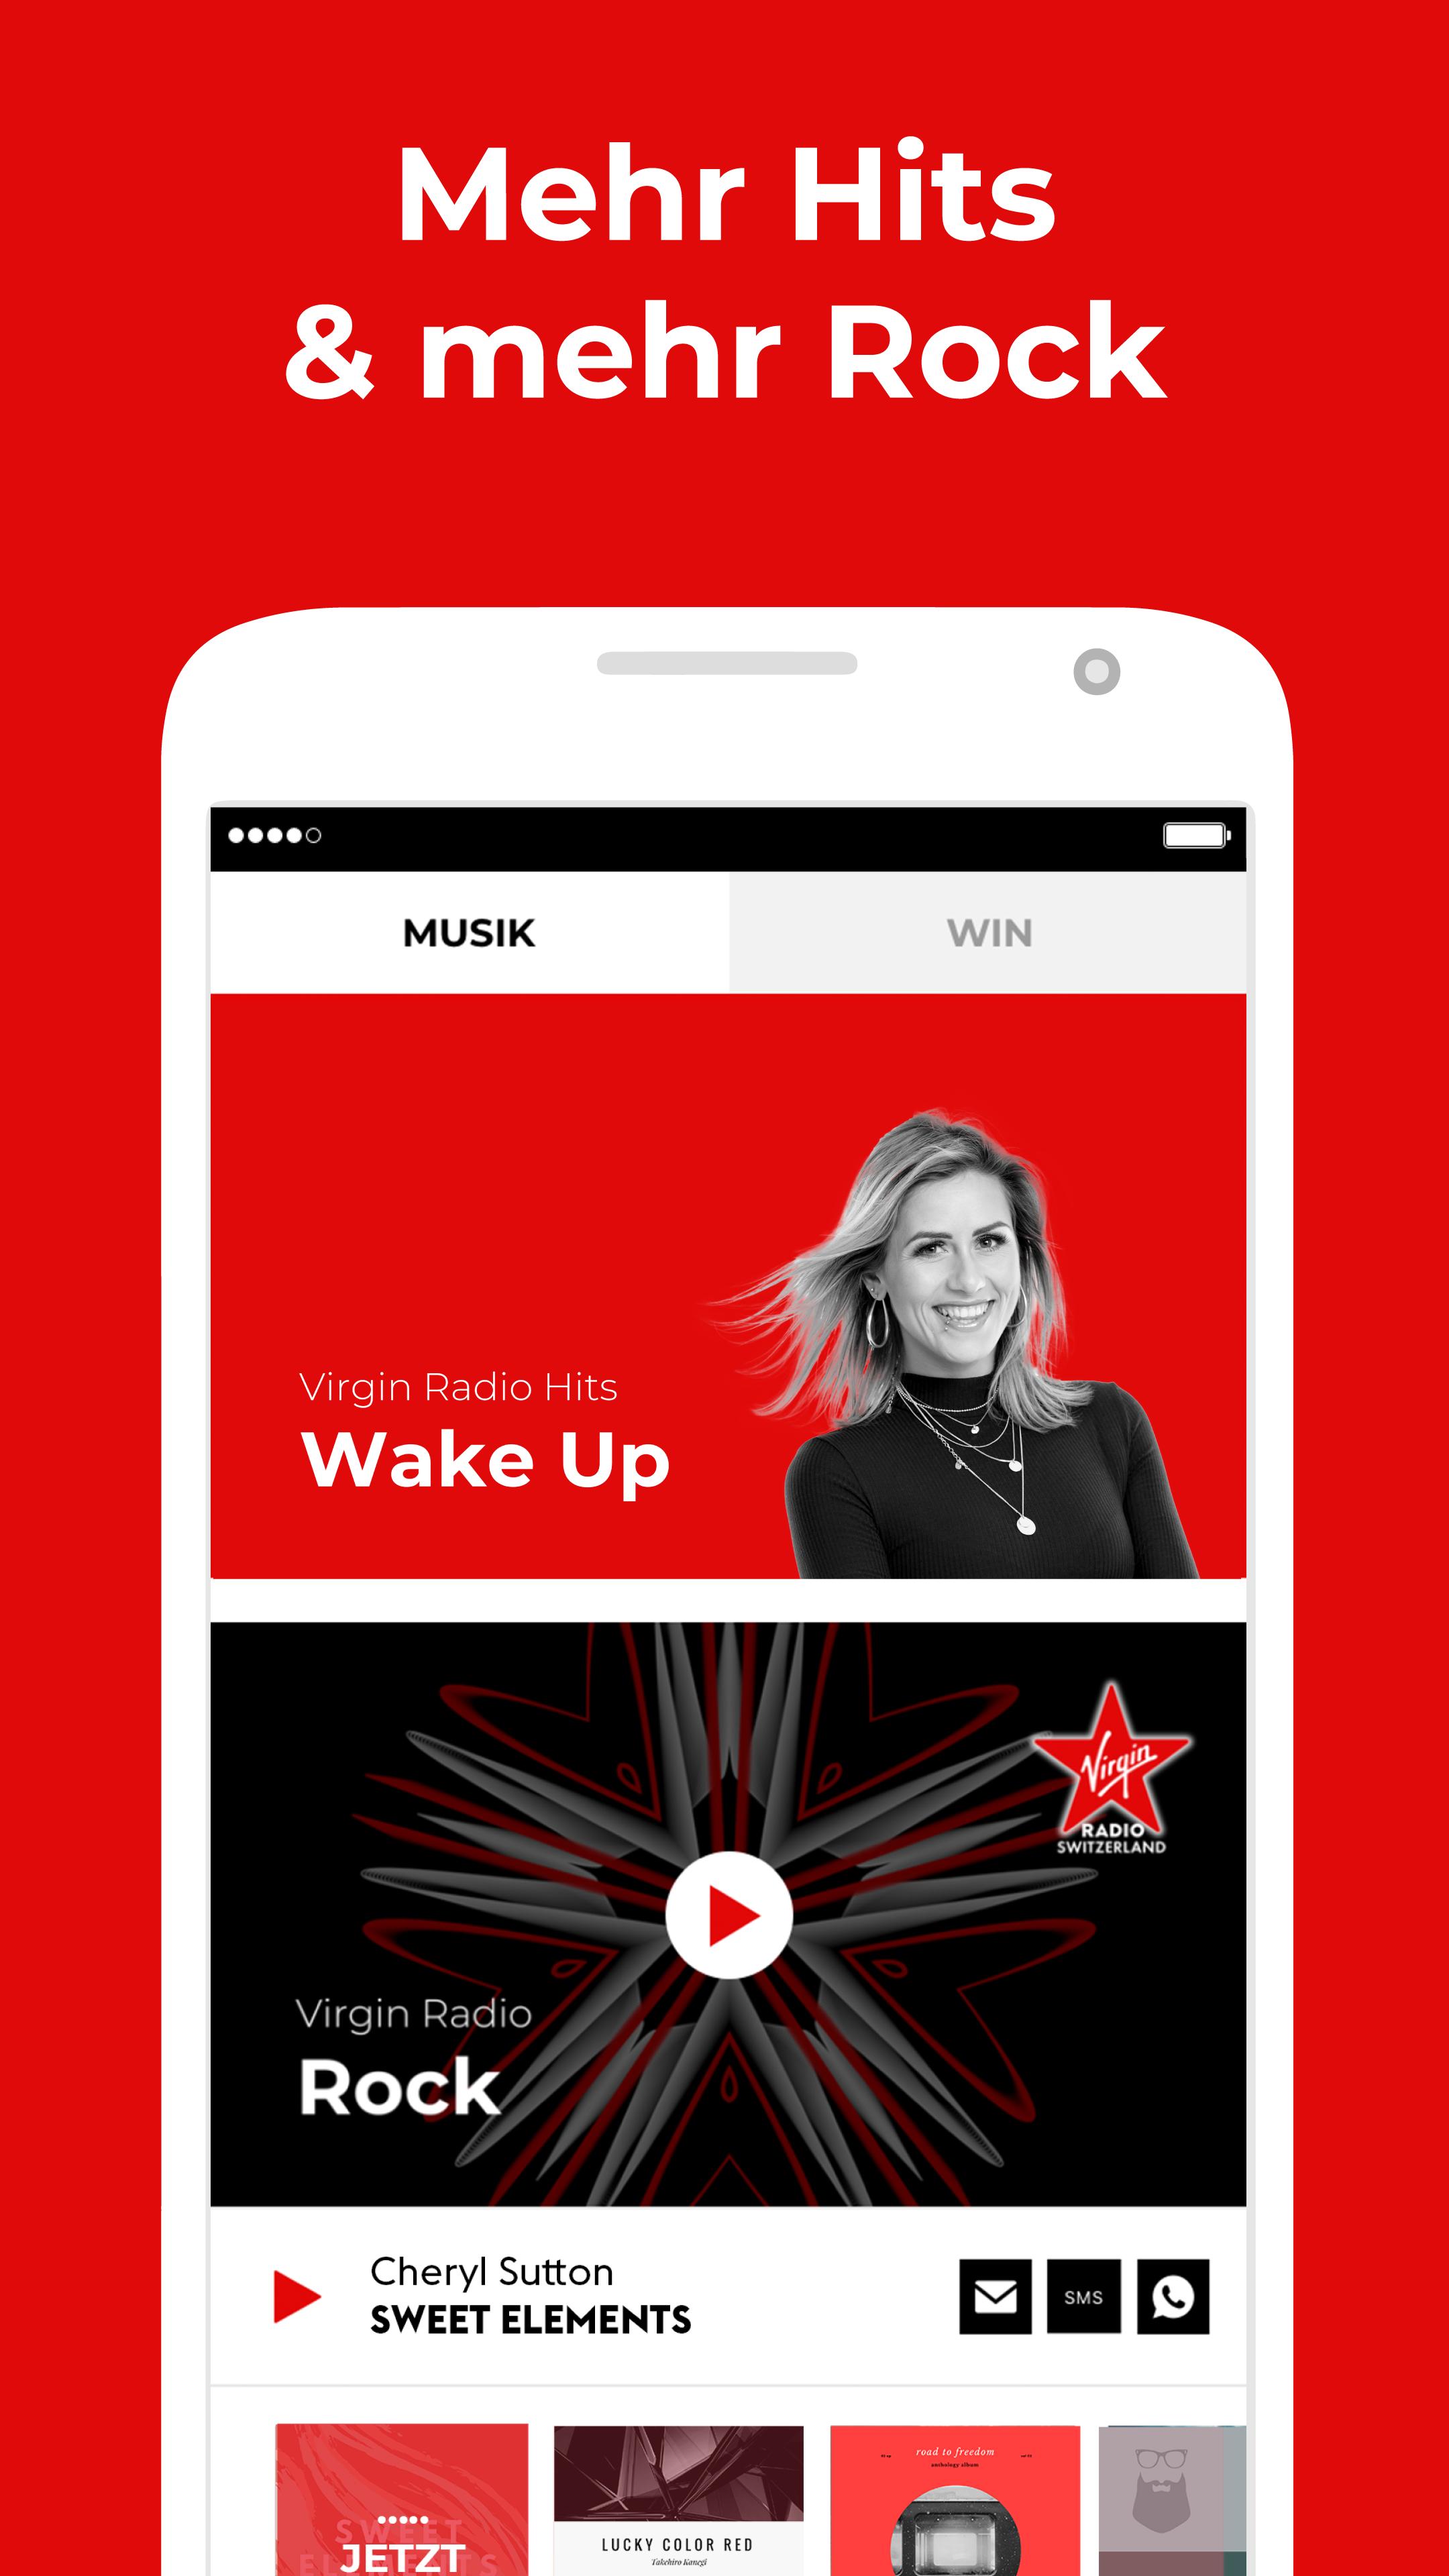 Virgin Radio Switzerland for Android - APK Download